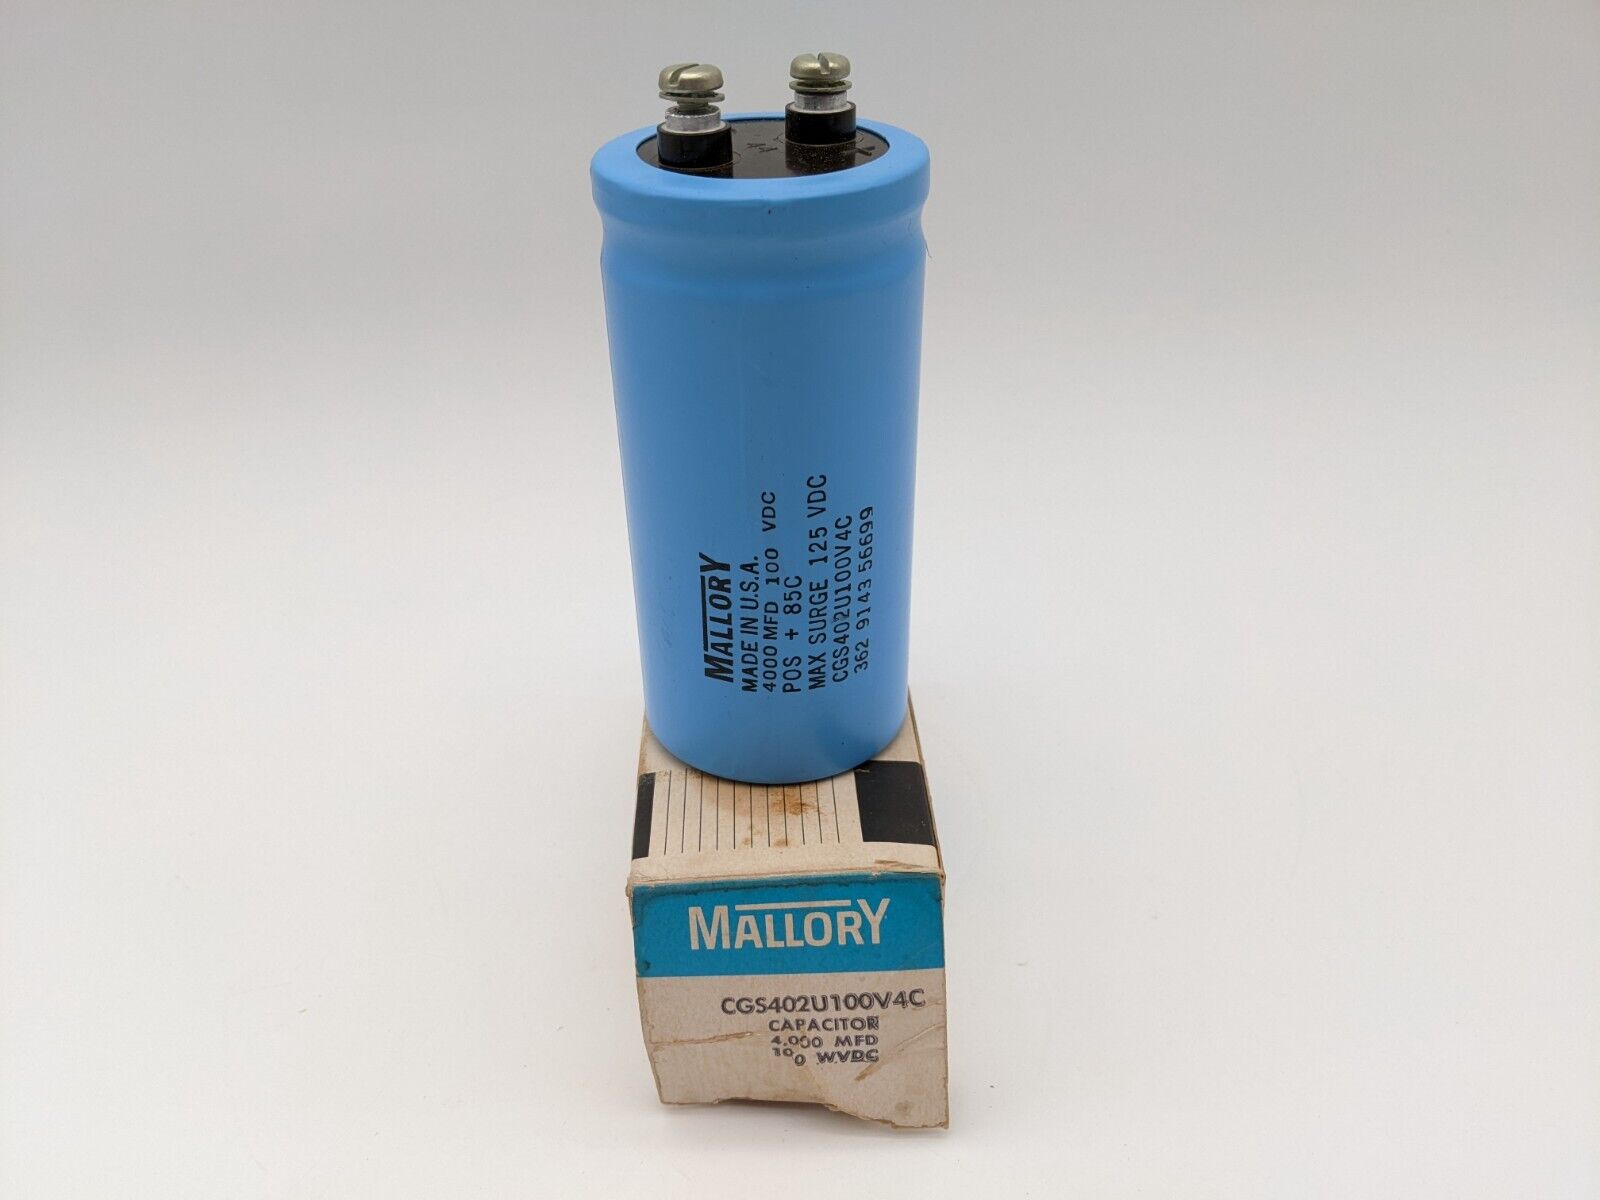 Mallory  CGS402U100R4C Aluminum Capacitor 4000 MFD 100 VDC Cylinder Electrical